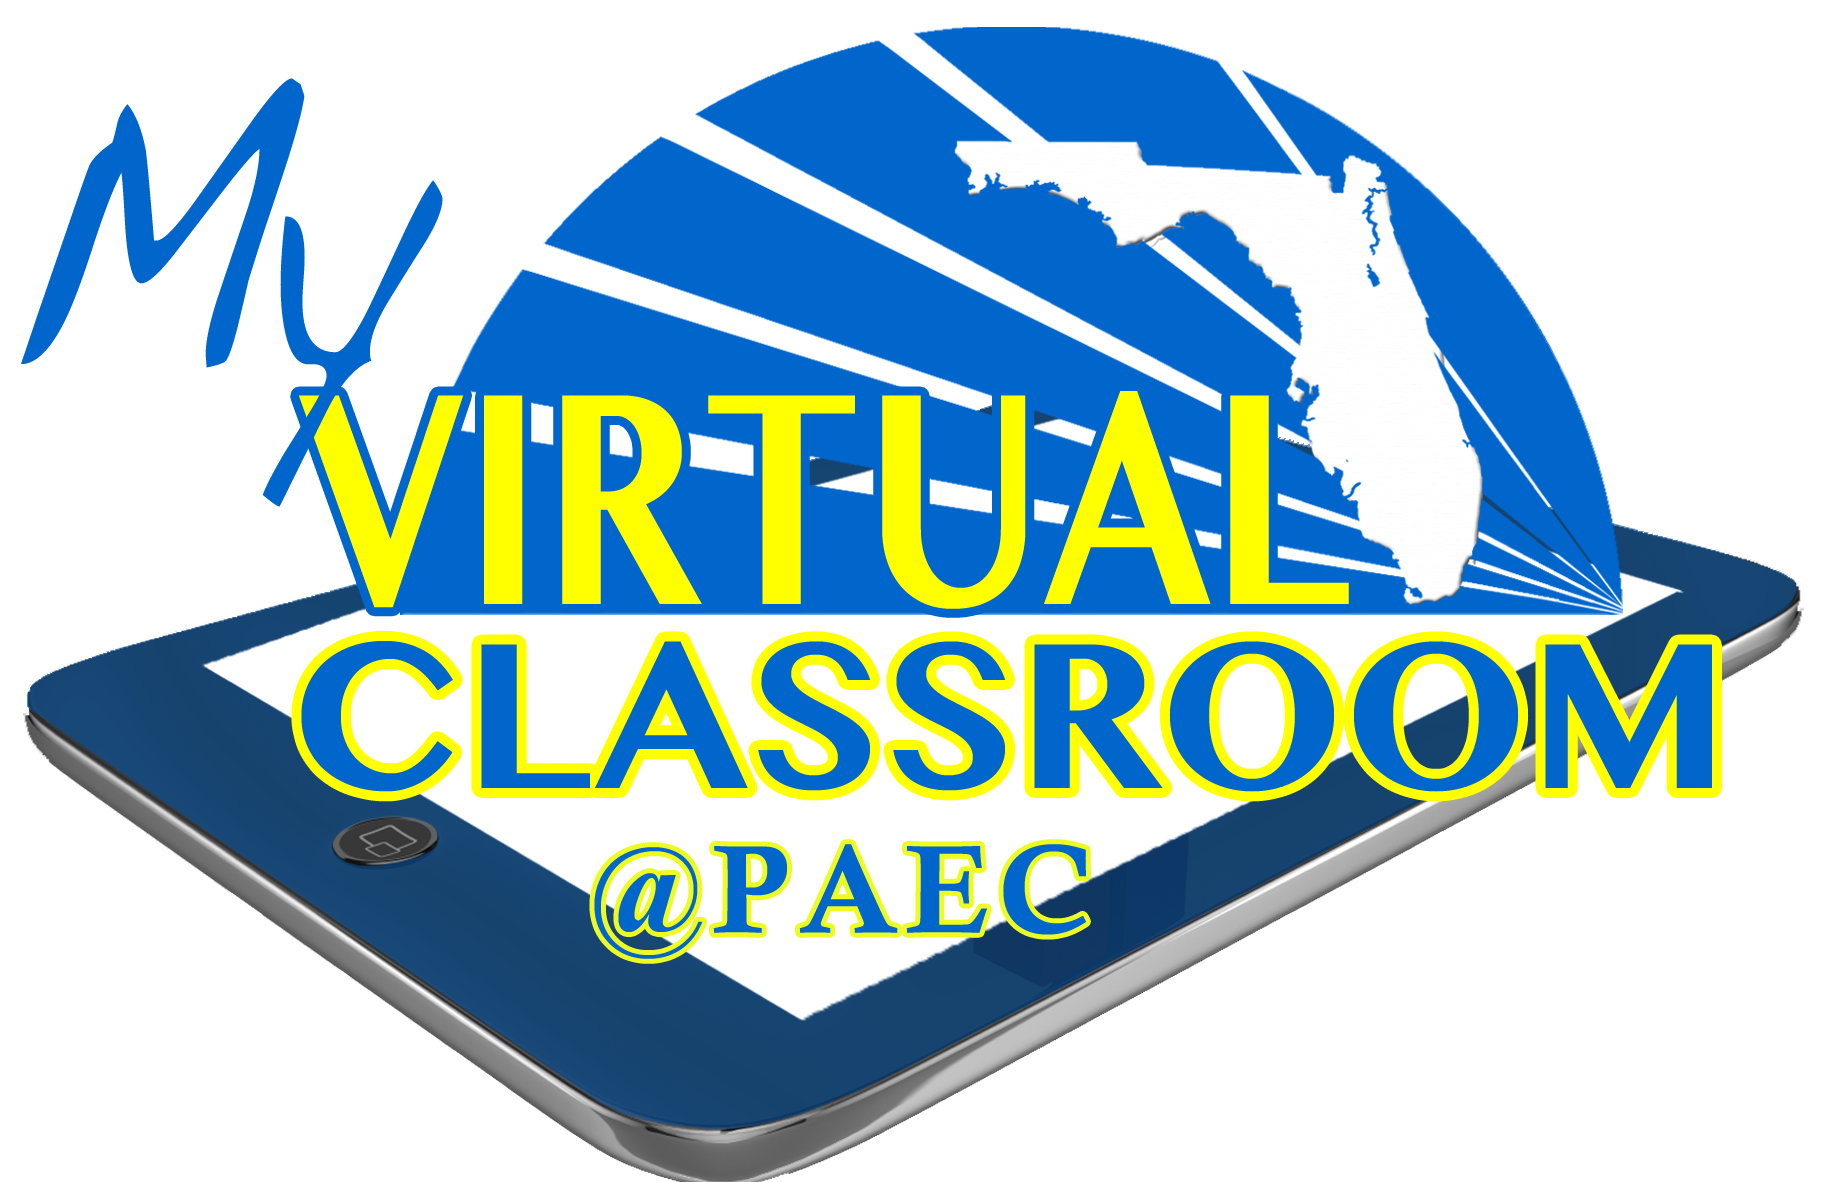 My Virtual Classroom